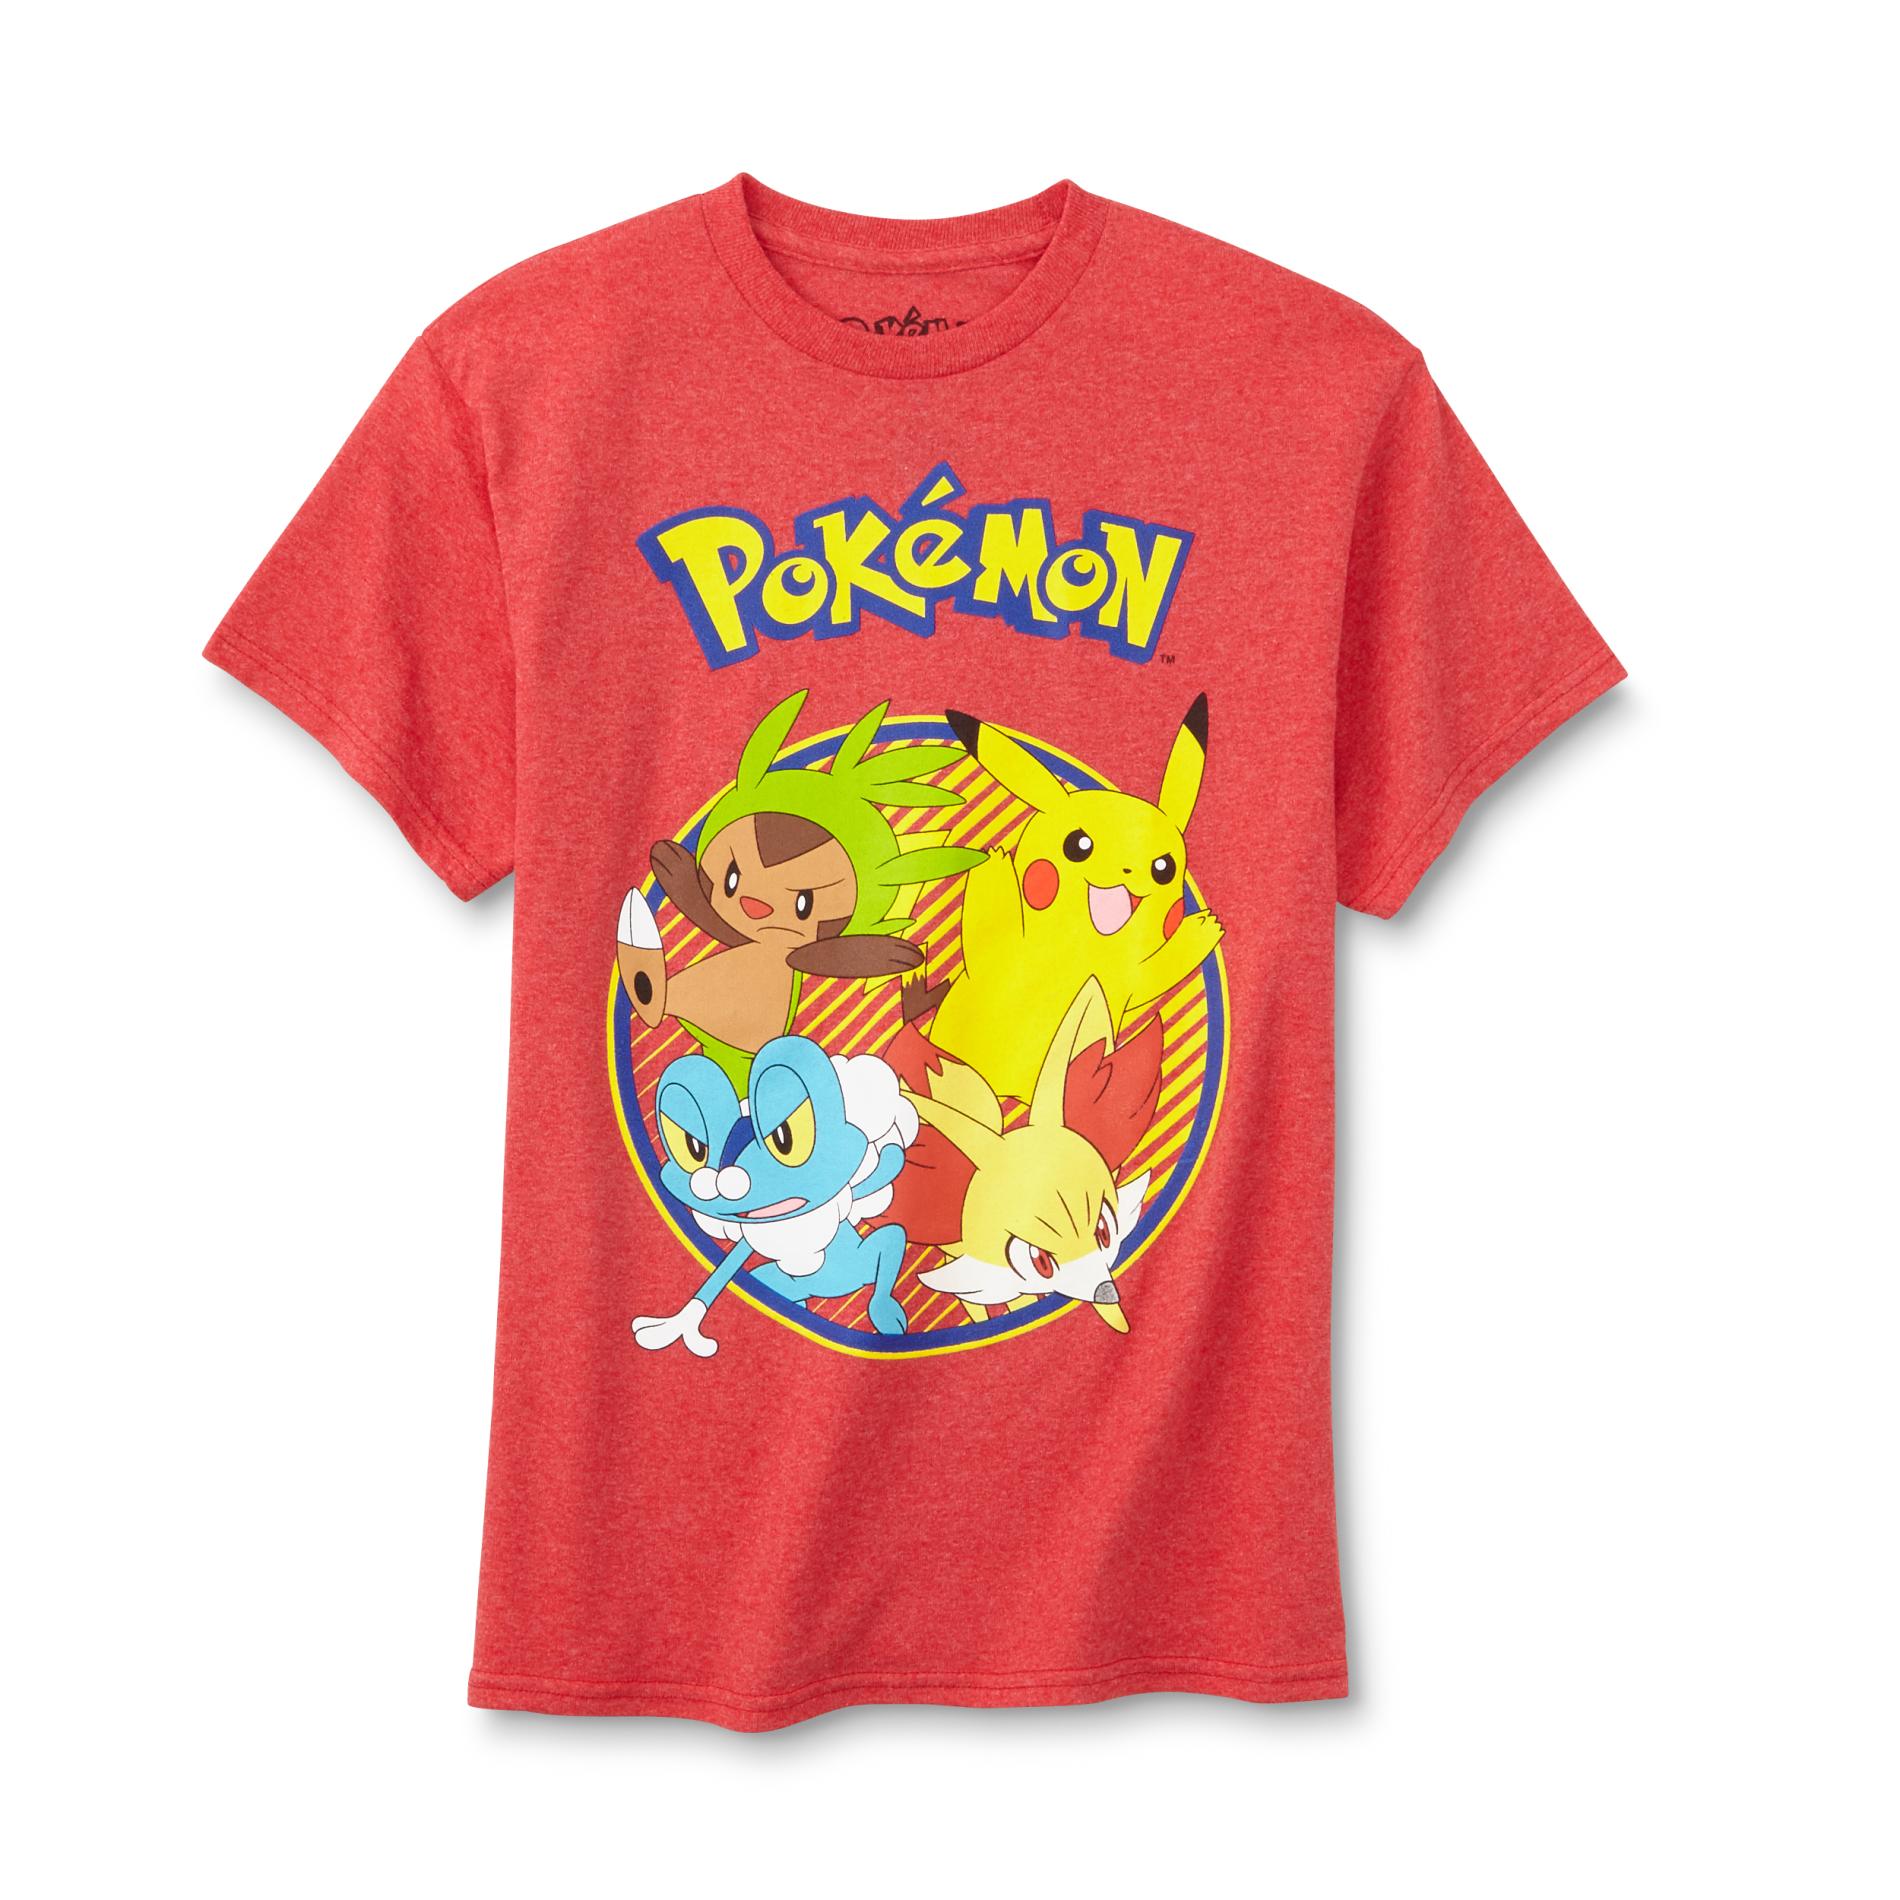 Pokmon Boys' T-Shirt - Pikachu